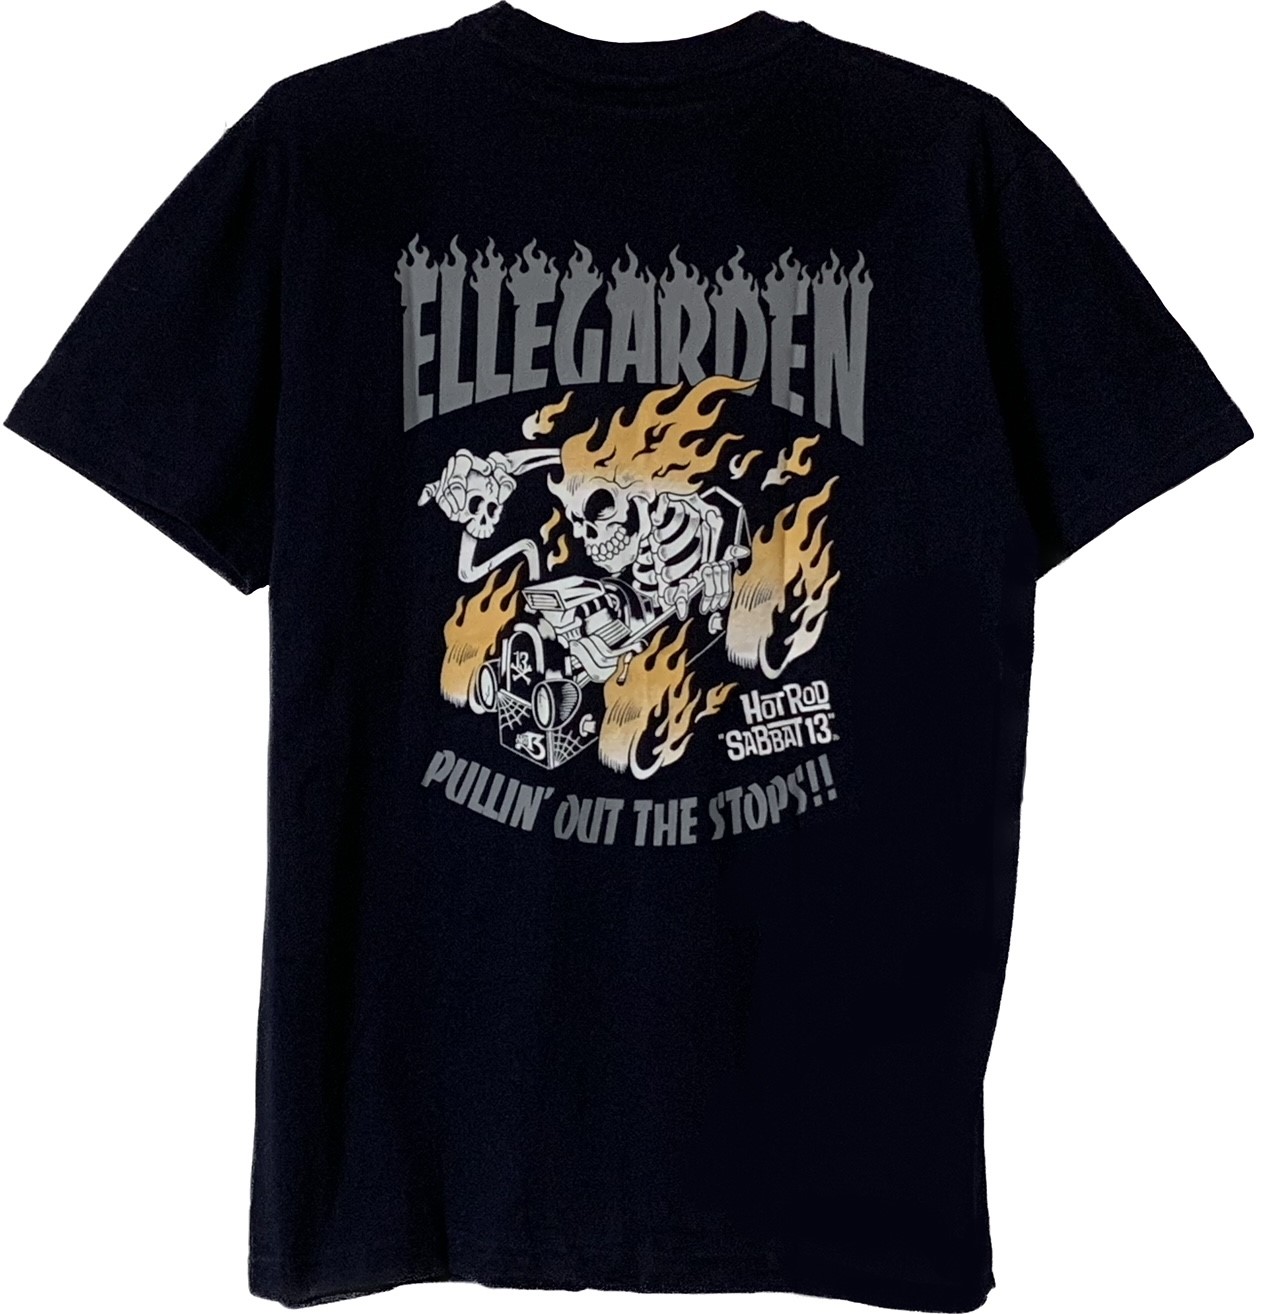 Ellegarden (엘르가든) - SABBAT13 티셔츠 [네이비 컬러/S사이즈]